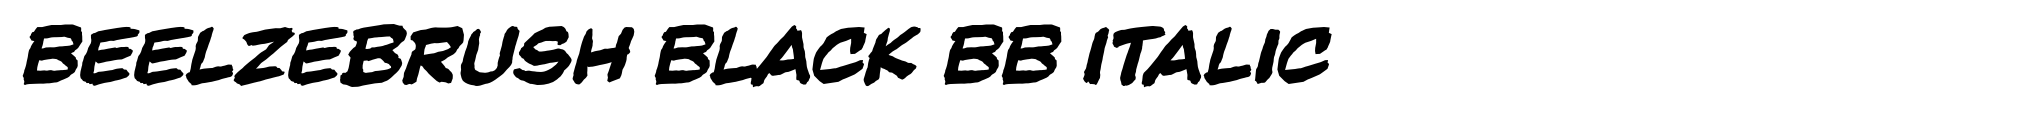 Beelzebrush Black BB Italic image